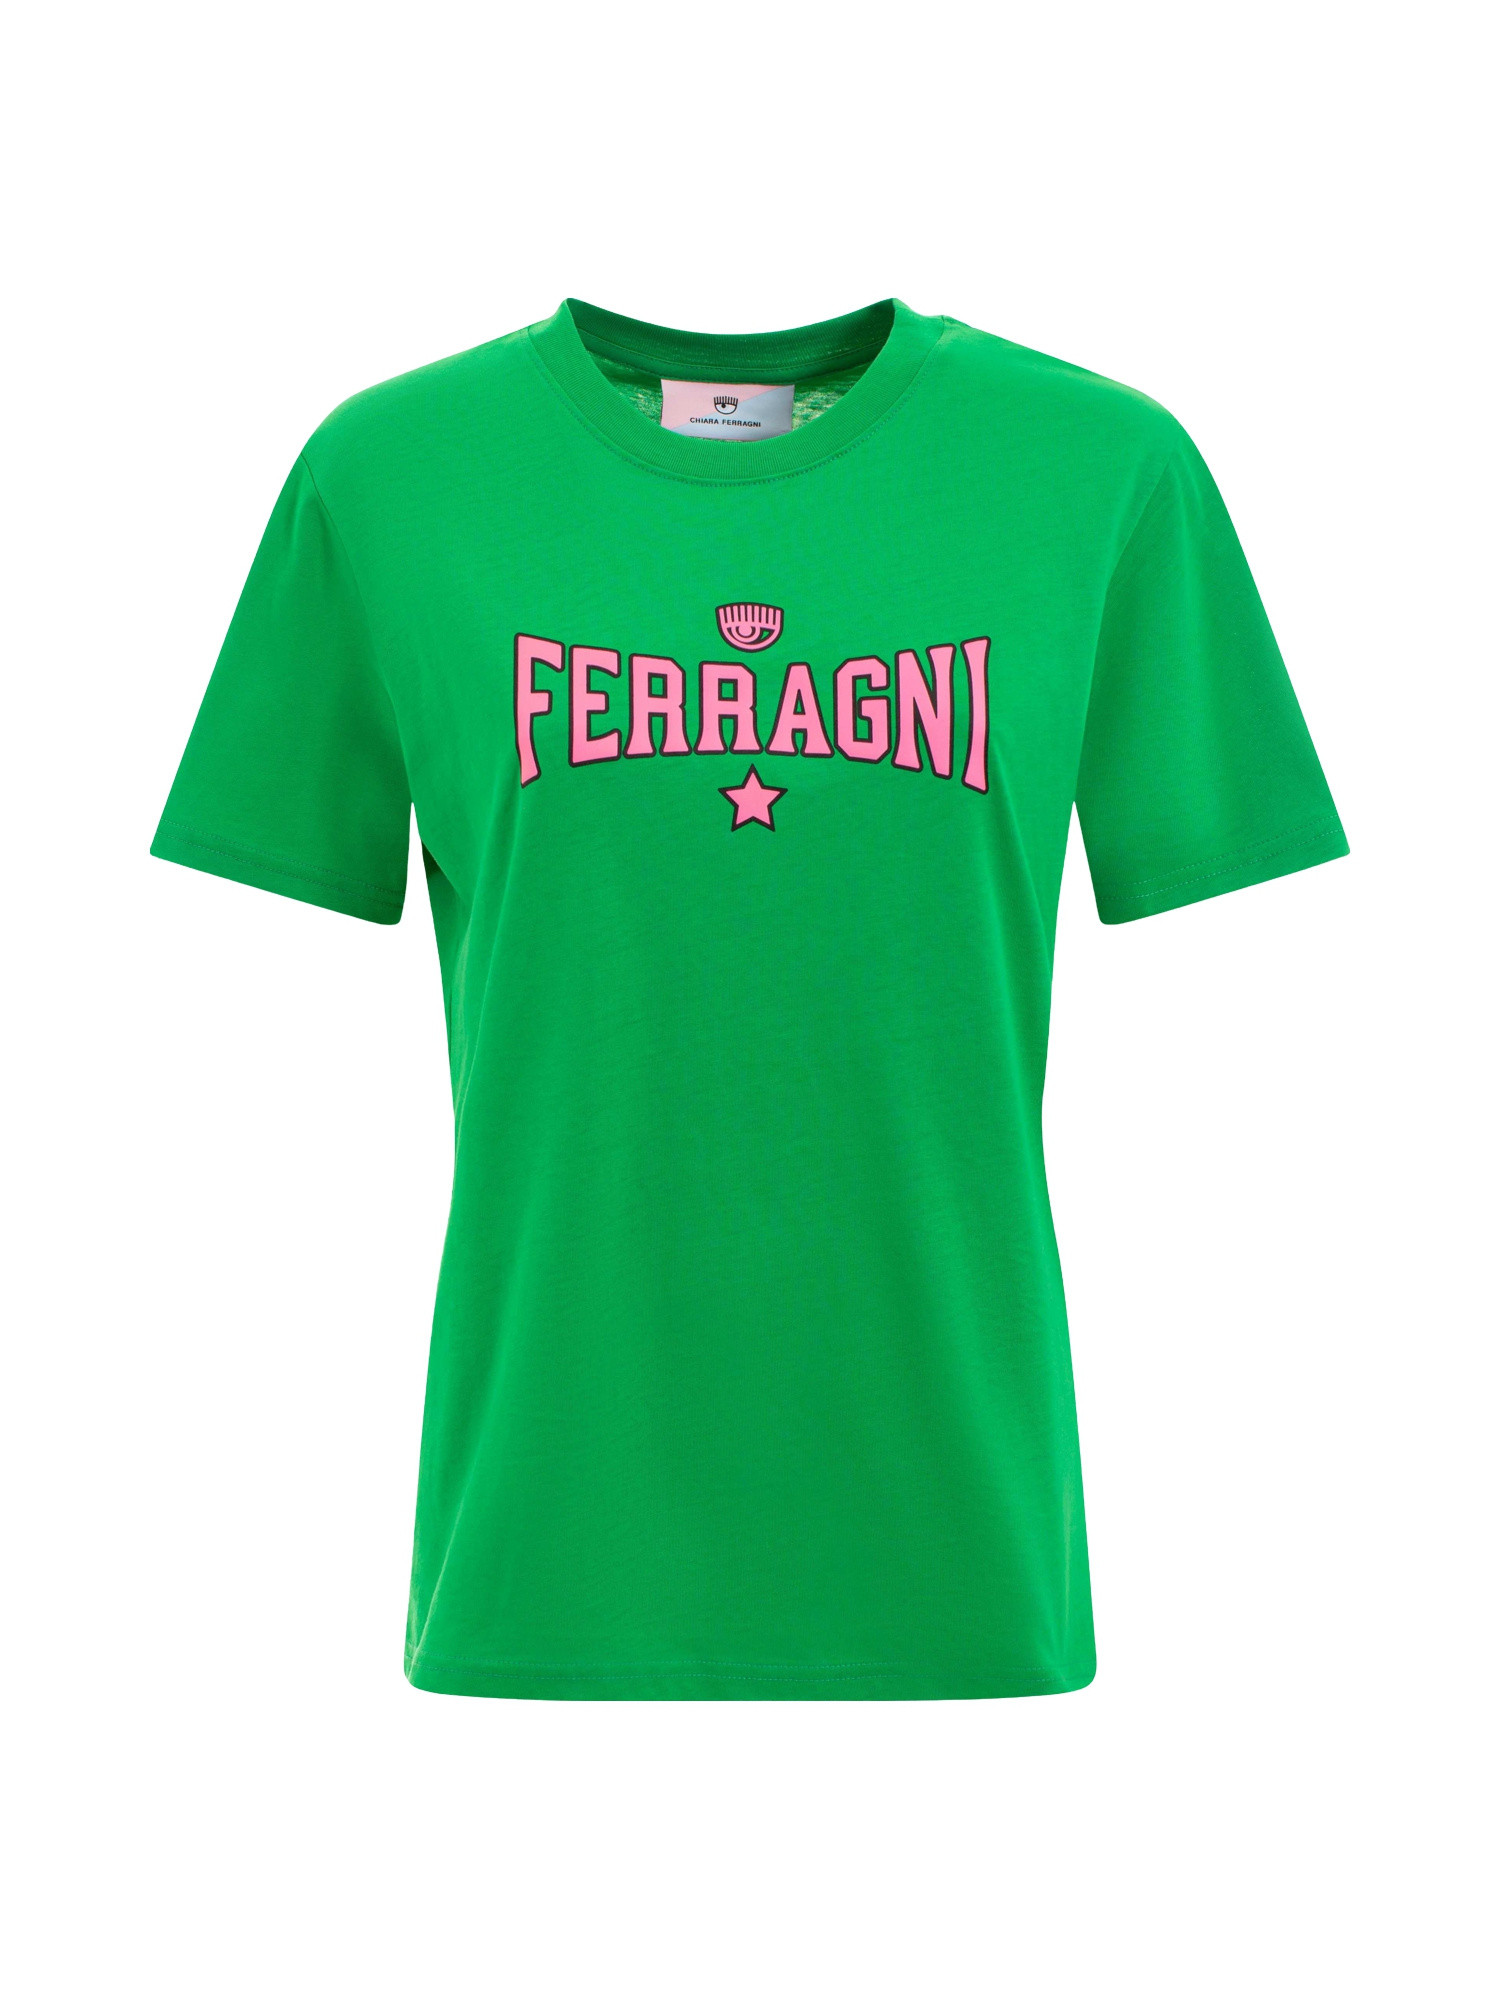 Chiara Ferragni - T-shirt con stampa logo, Verde, large image number 0